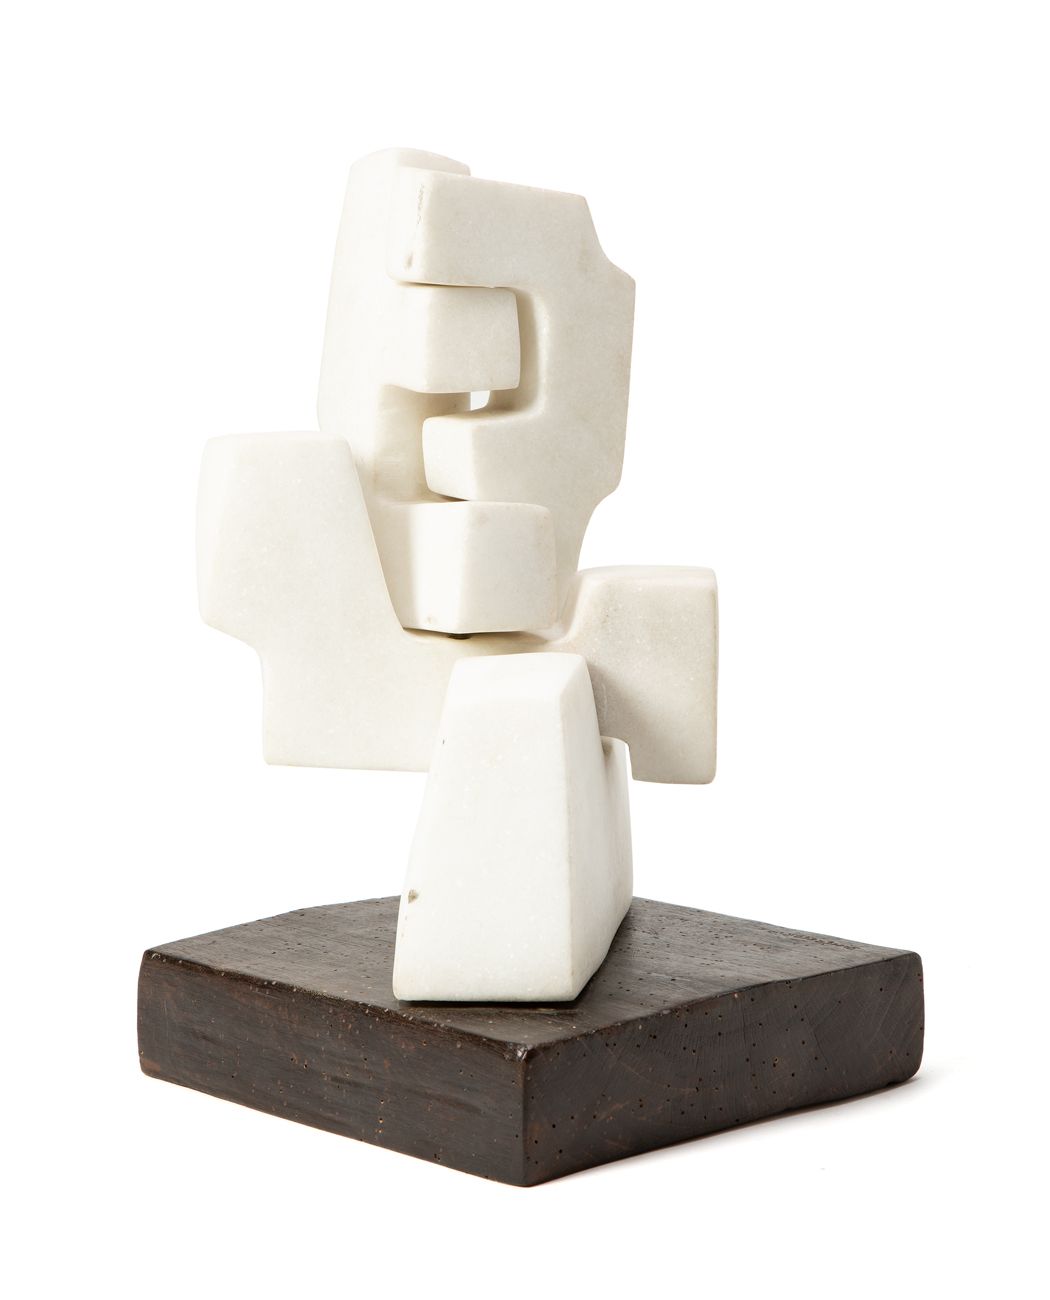 GIANCARLO SANGREGORIO (1925-2013) - Modulare, 1992 Sculpture en marbre et bois

&hellip;